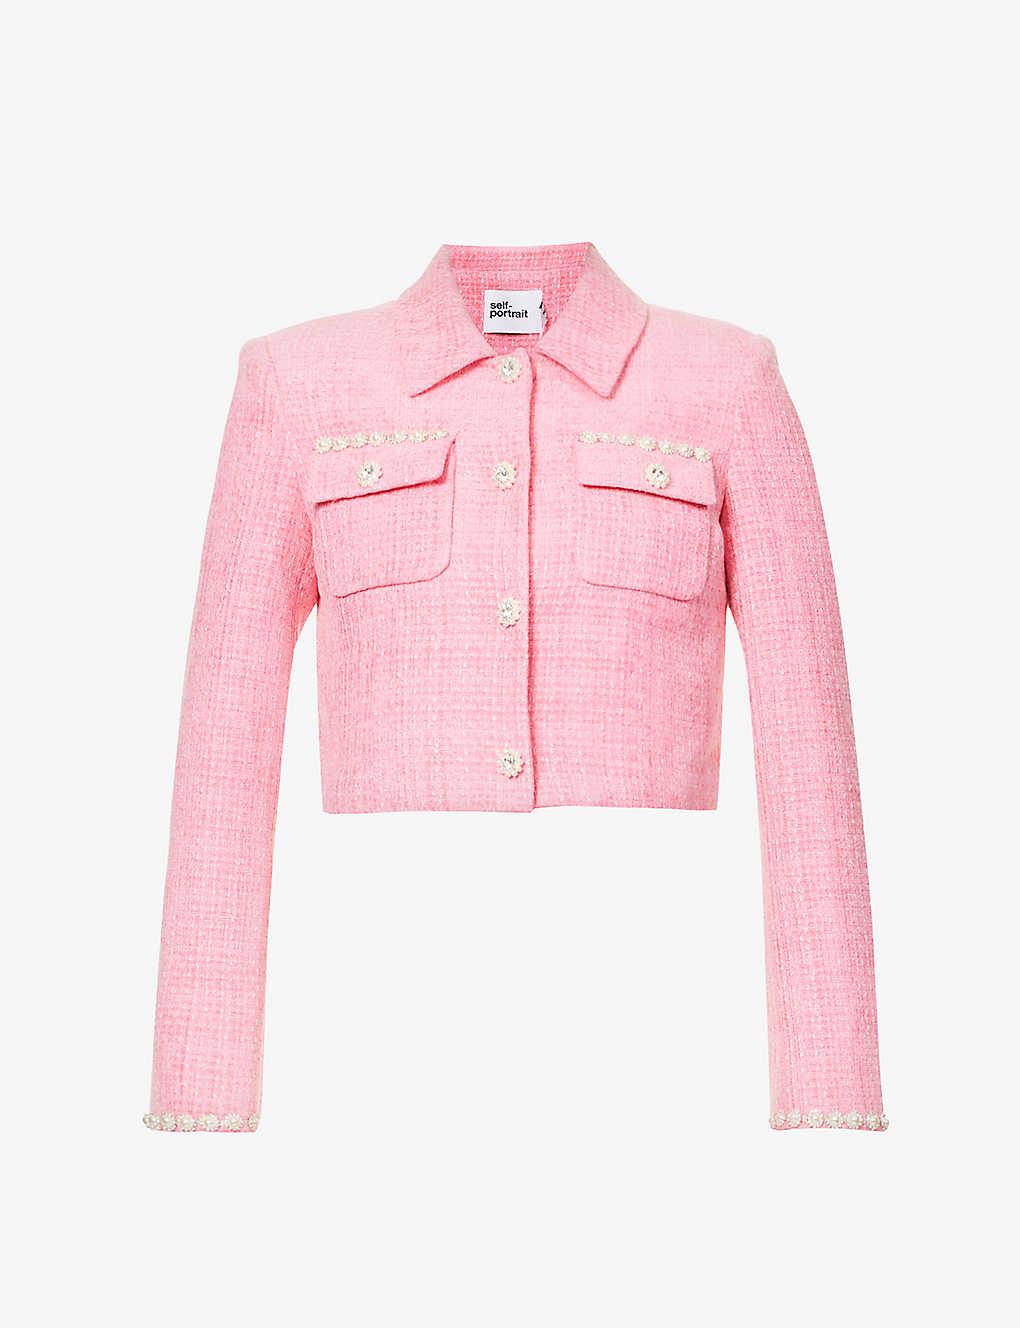 Self-Portrait Embellished Woven Jacket in Pink | Lyst